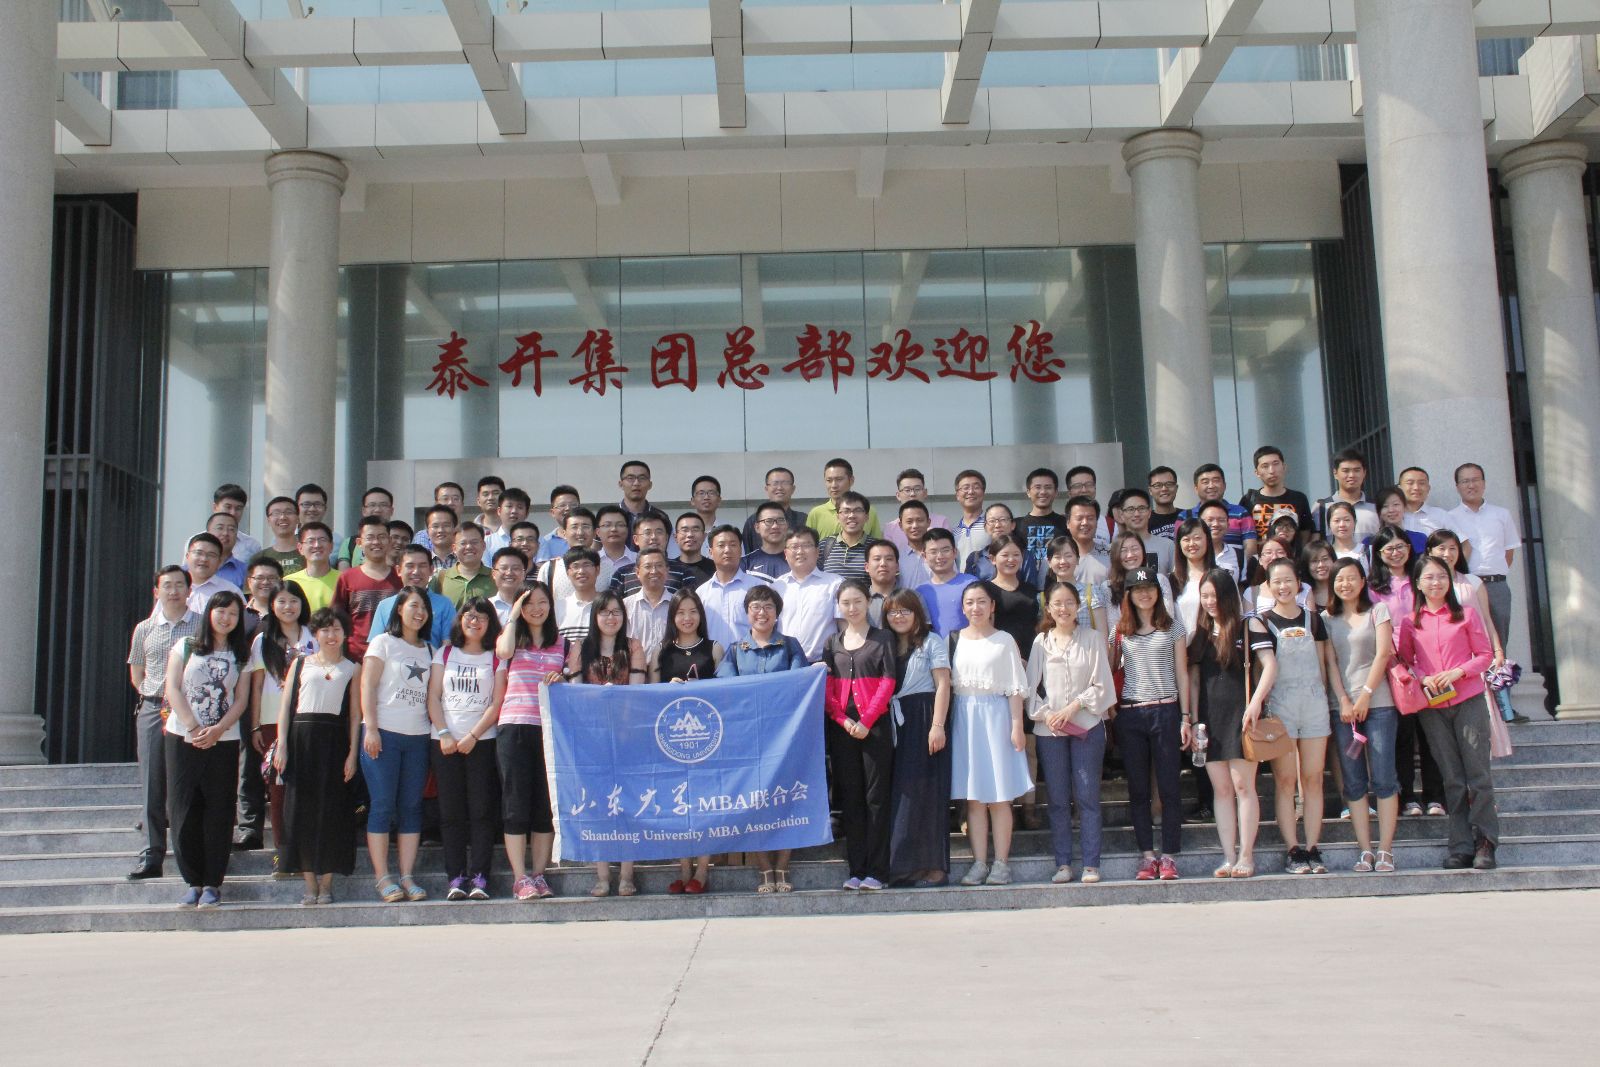 MBA Student Management School of Shandong University visited taikai group